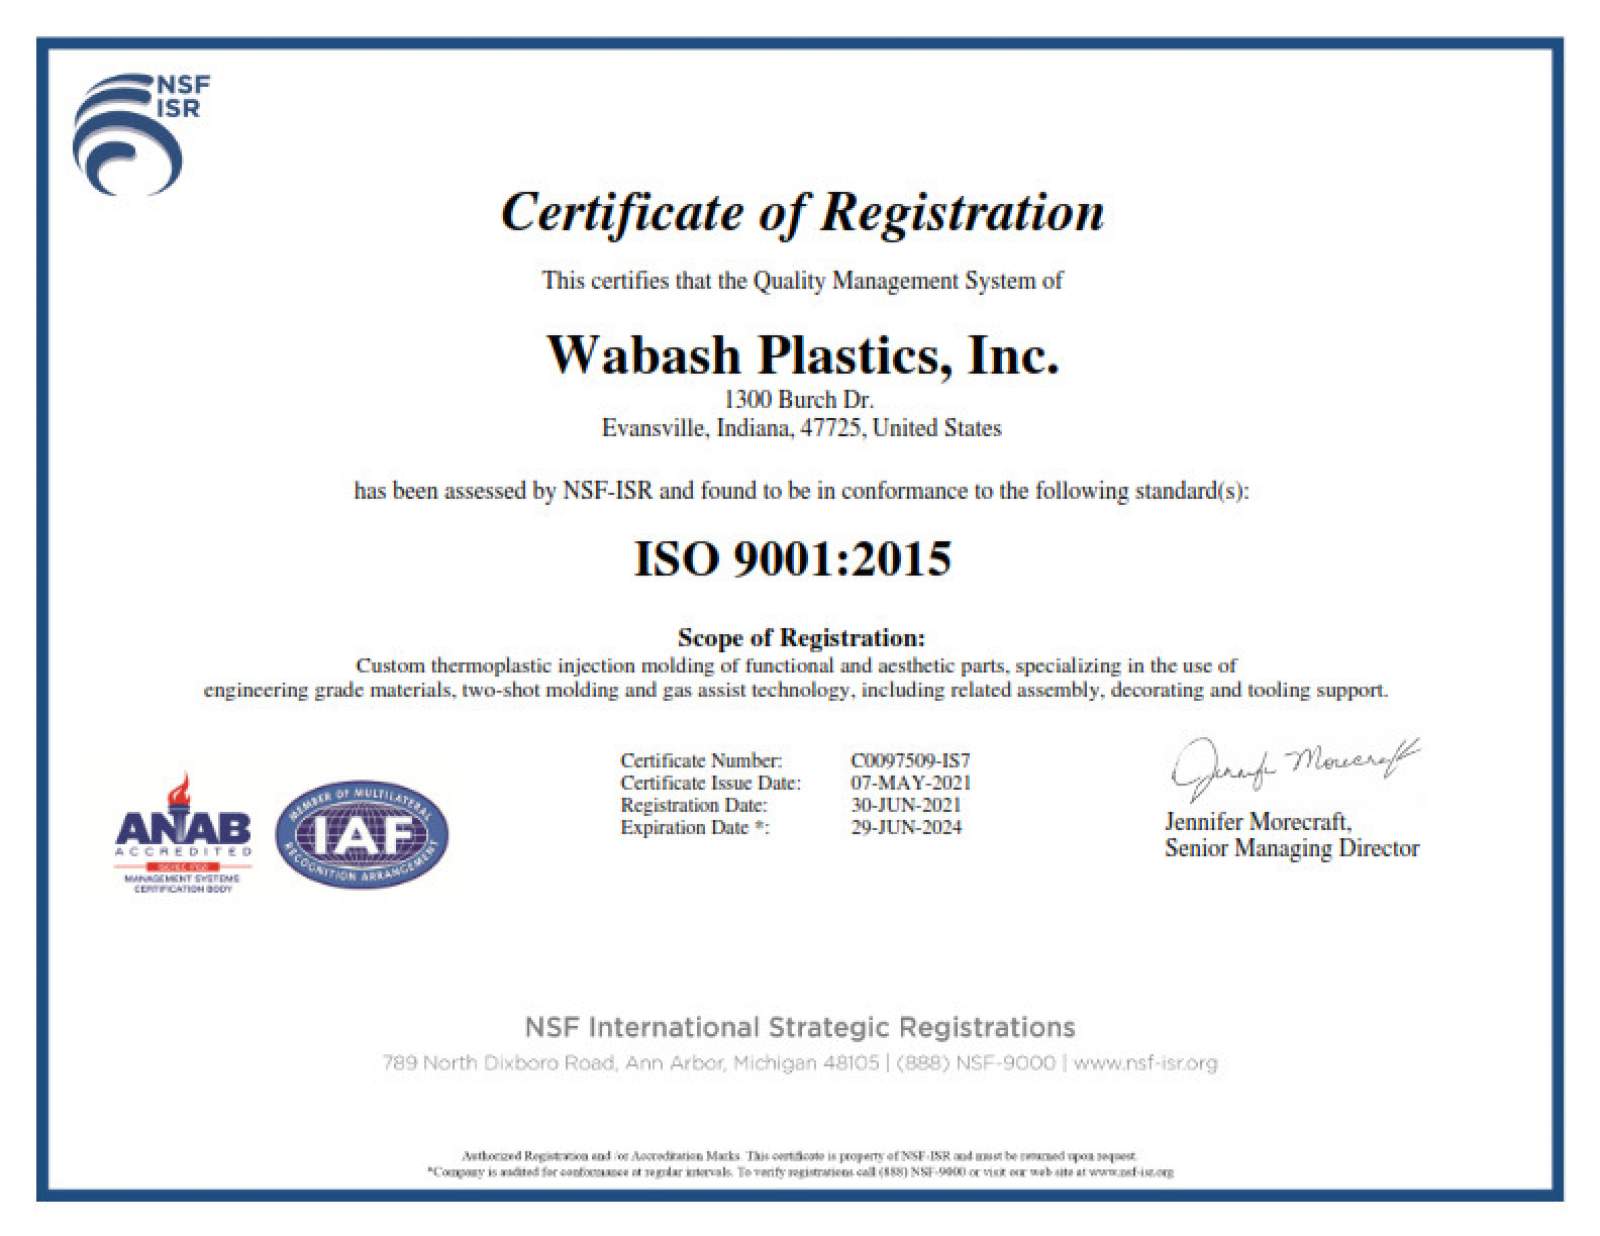 Wabash Plastics is a registered ISO9001:2015 custom injection molder